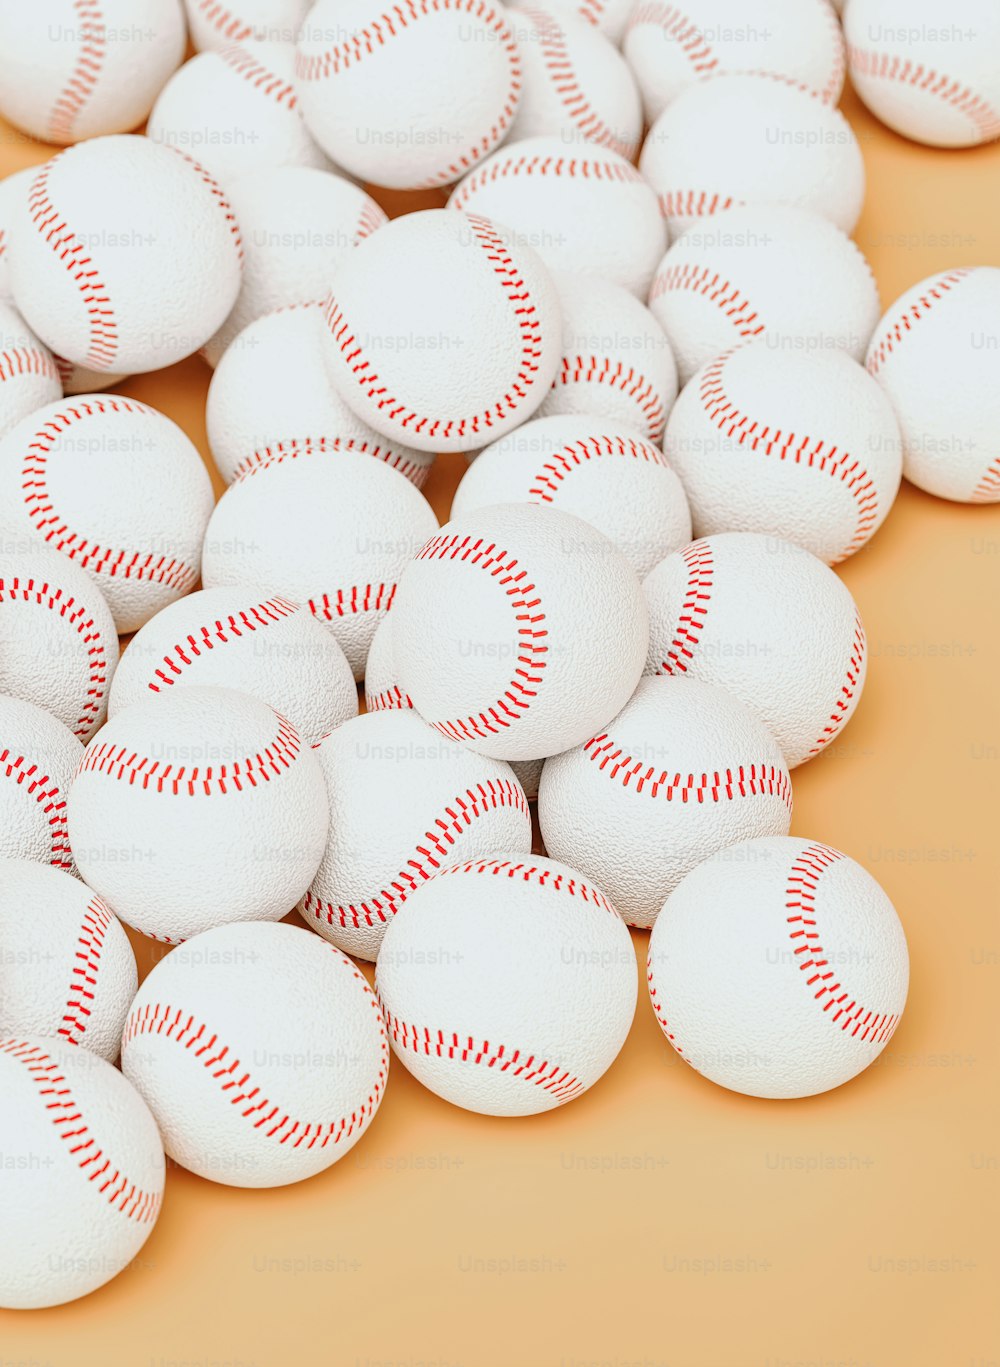 Una pila de pelotas de béisbol sentadas encima de una mesa